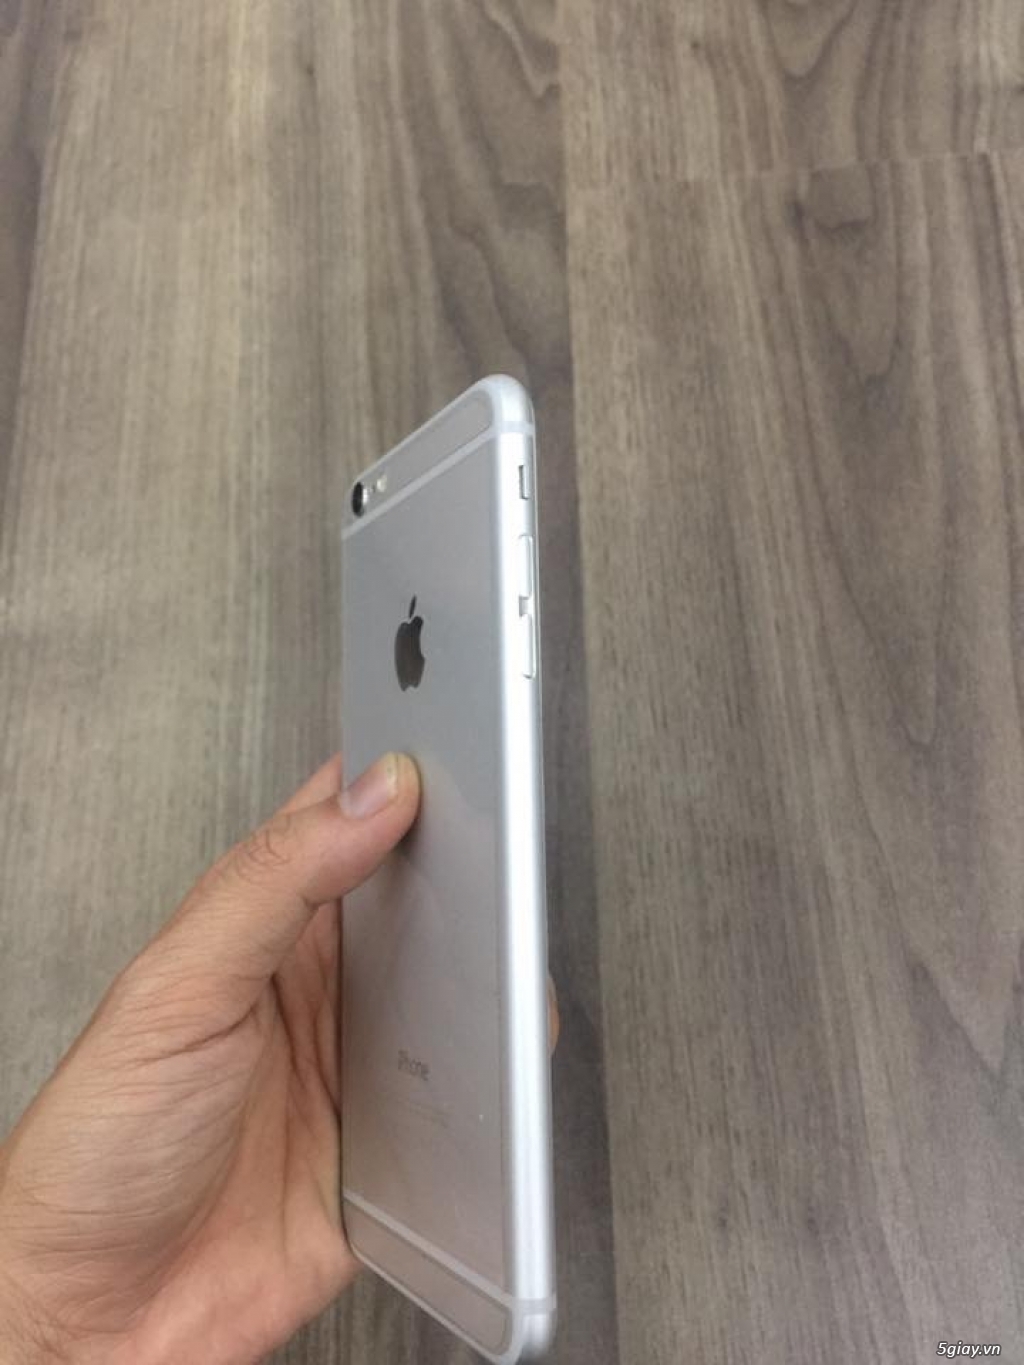 Iphone 6 plus lock 16G silver máy đẹp giá rẻ - 1